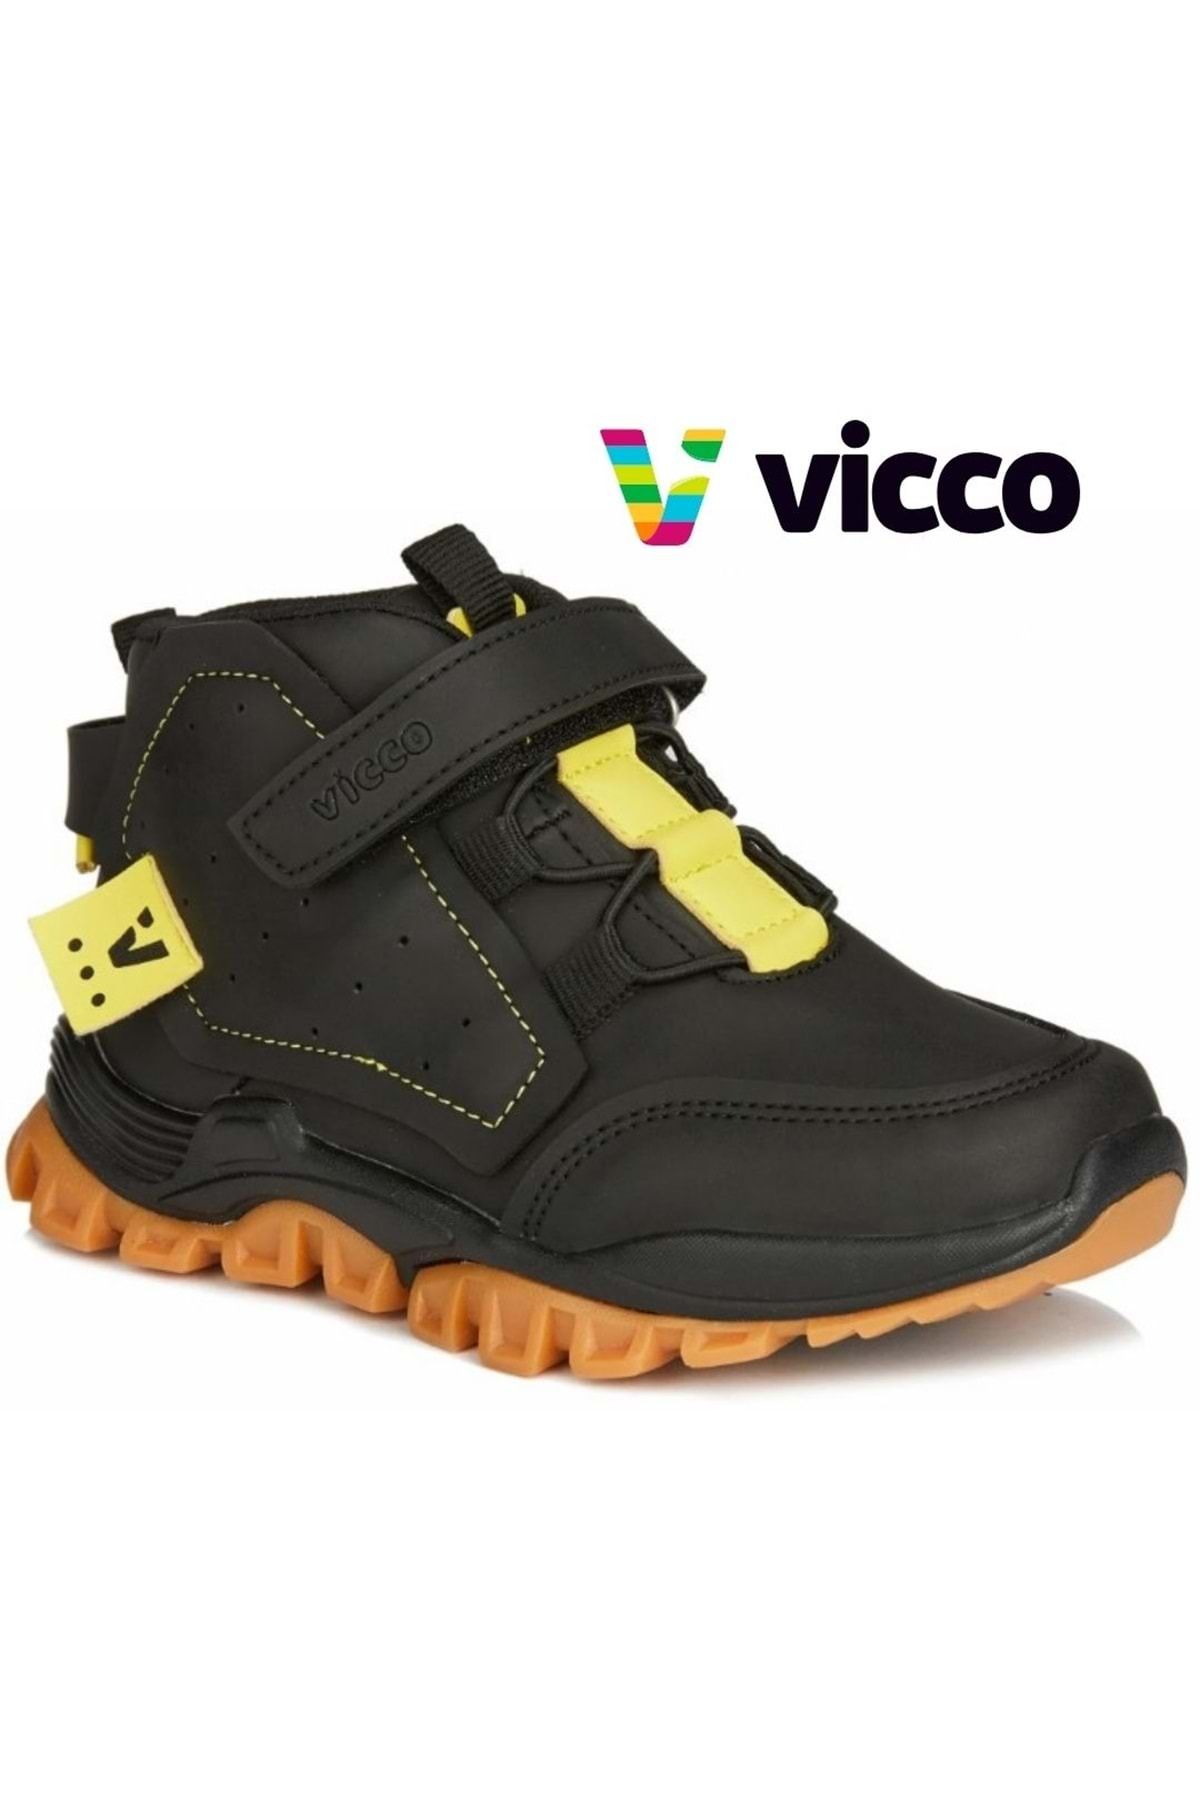 Vicco Omega Ortopedik Çocuk Bot Siyah-sarı